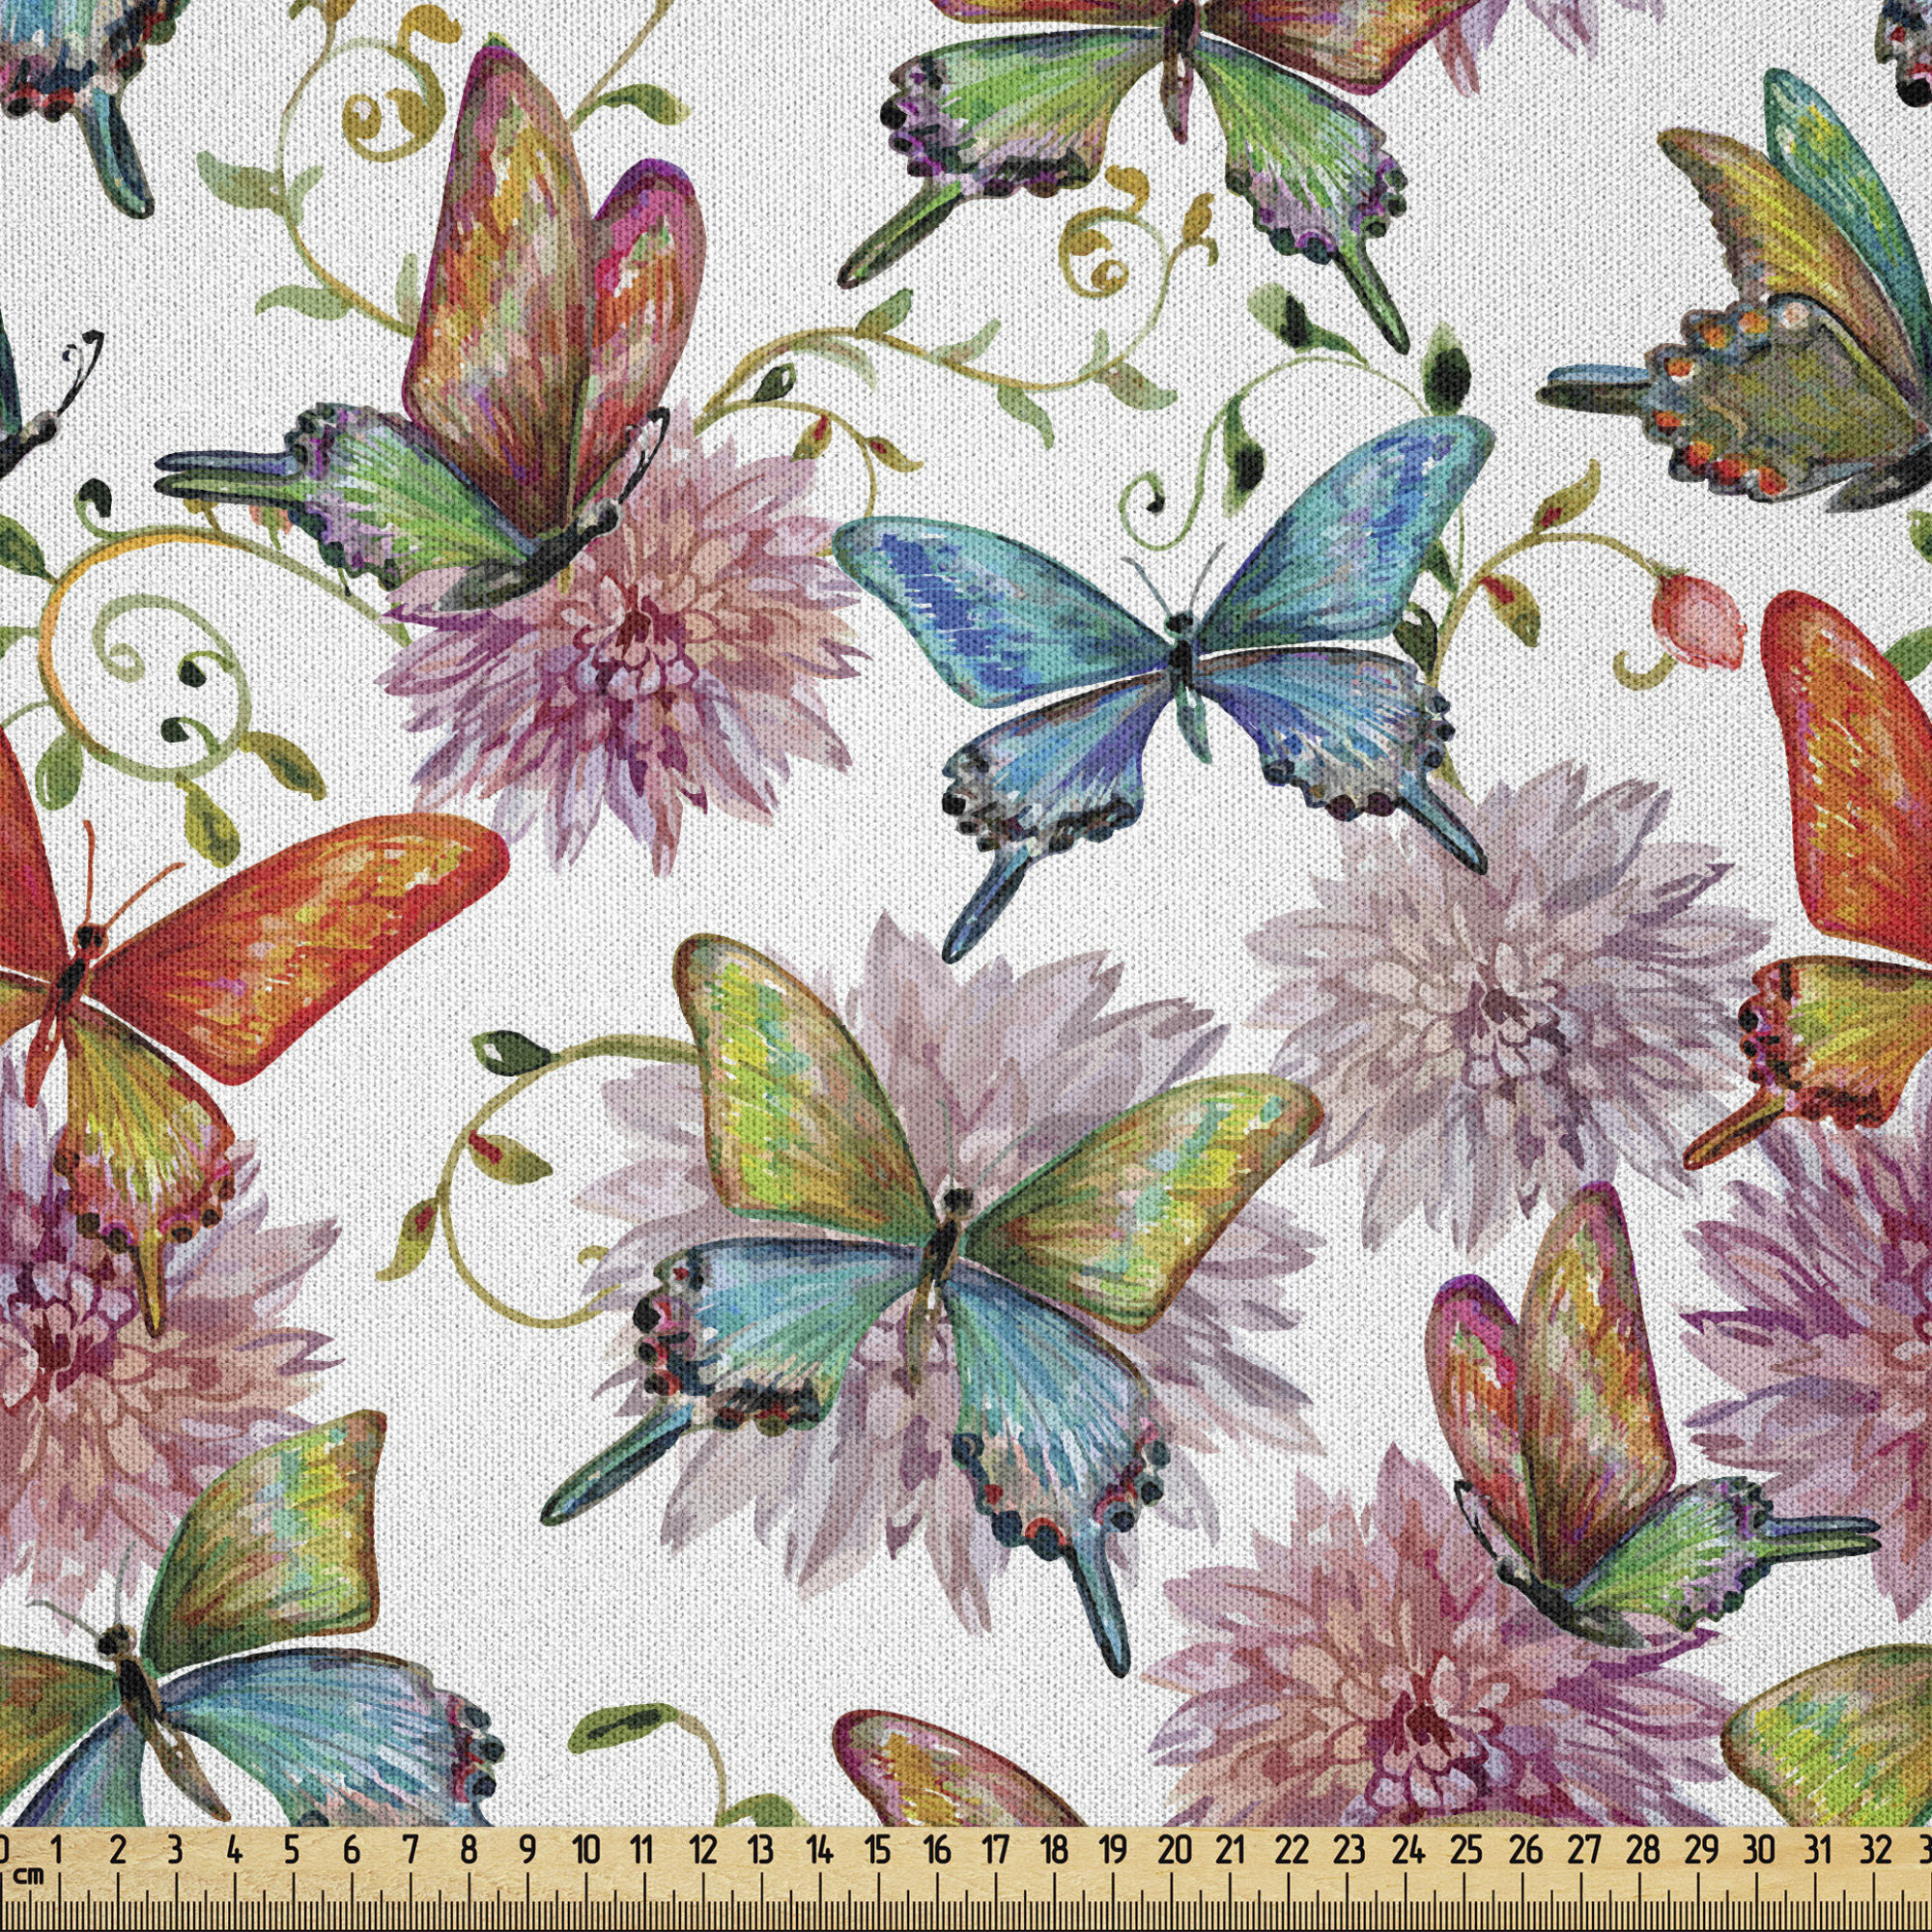 Vintage BUTTERFLIES Silk Butterflies Floral Crafts Vintage Craft Item Vintage Floral Arrangements Vintage Wall Decor